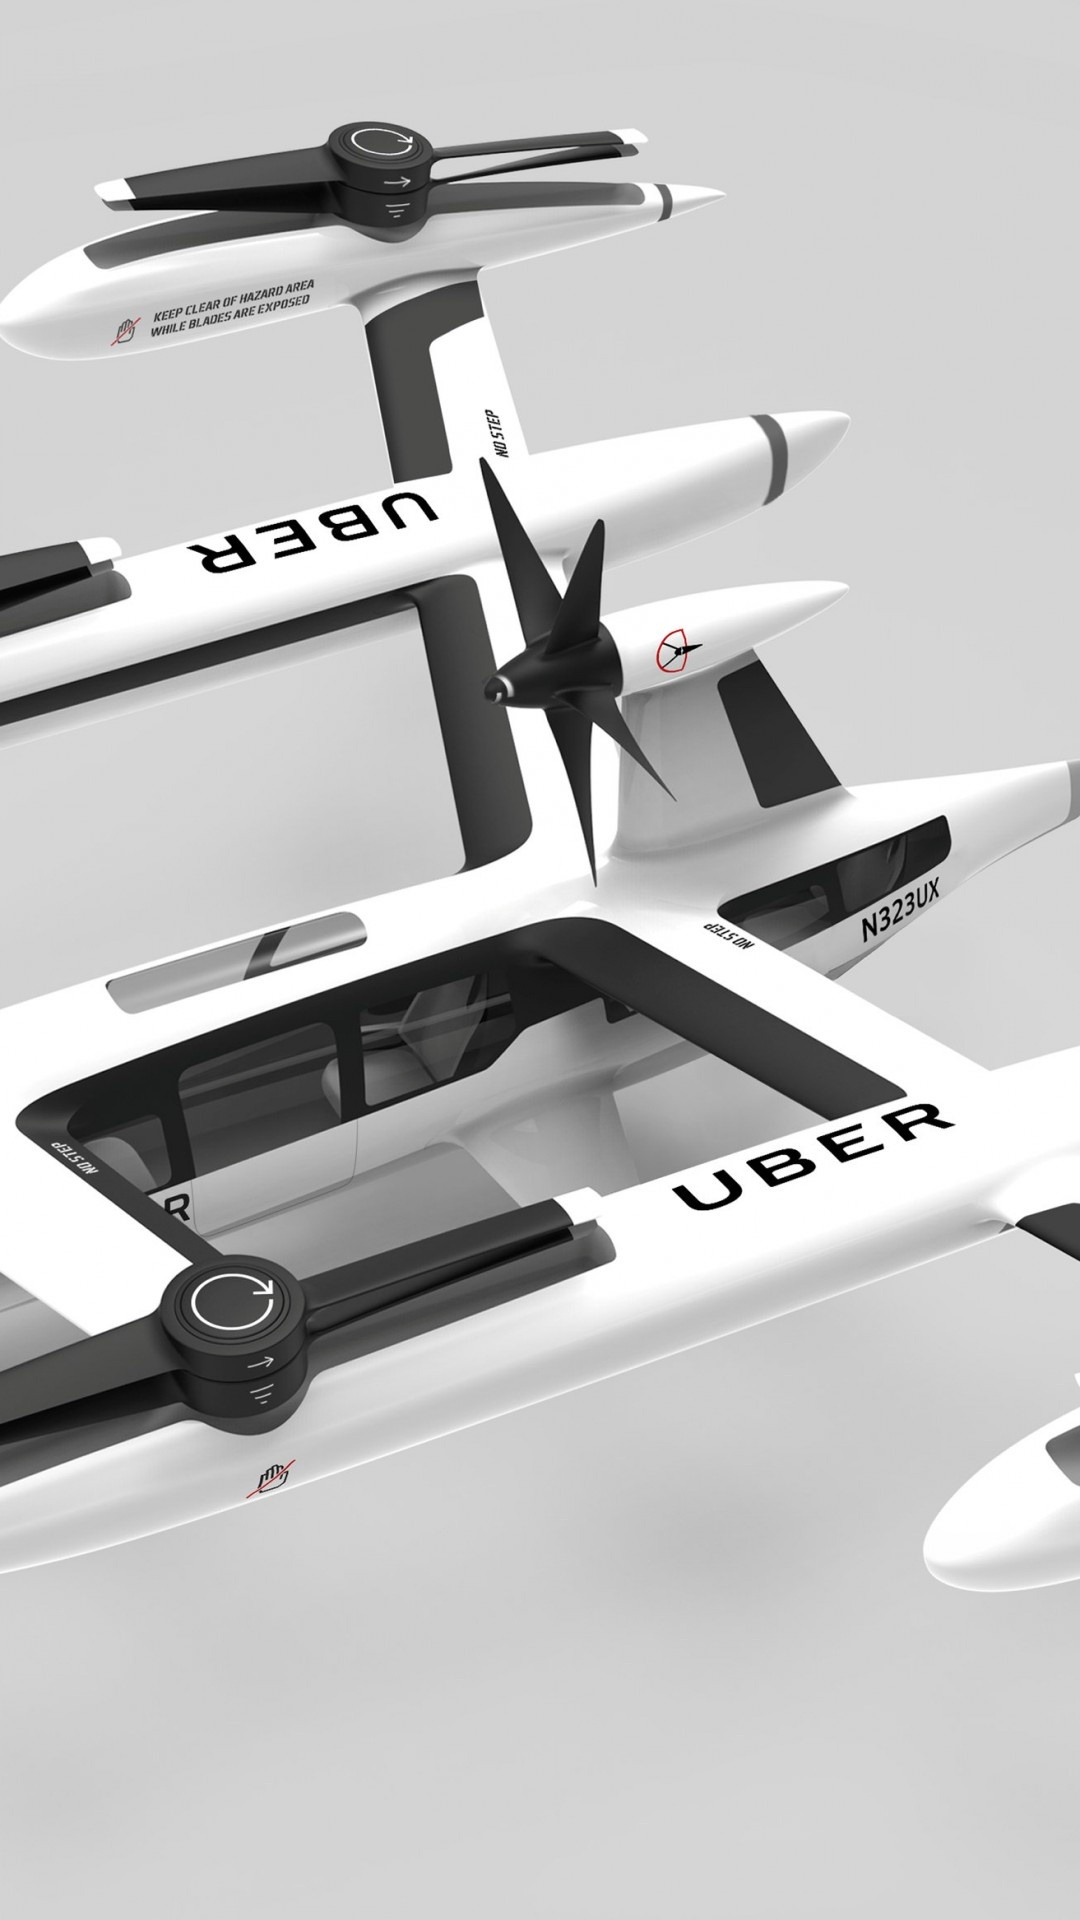 Uber: Uber Elevate Summit, Flying taxi, Urban aerial ridesharing. 1080x1920 Full HD Background.